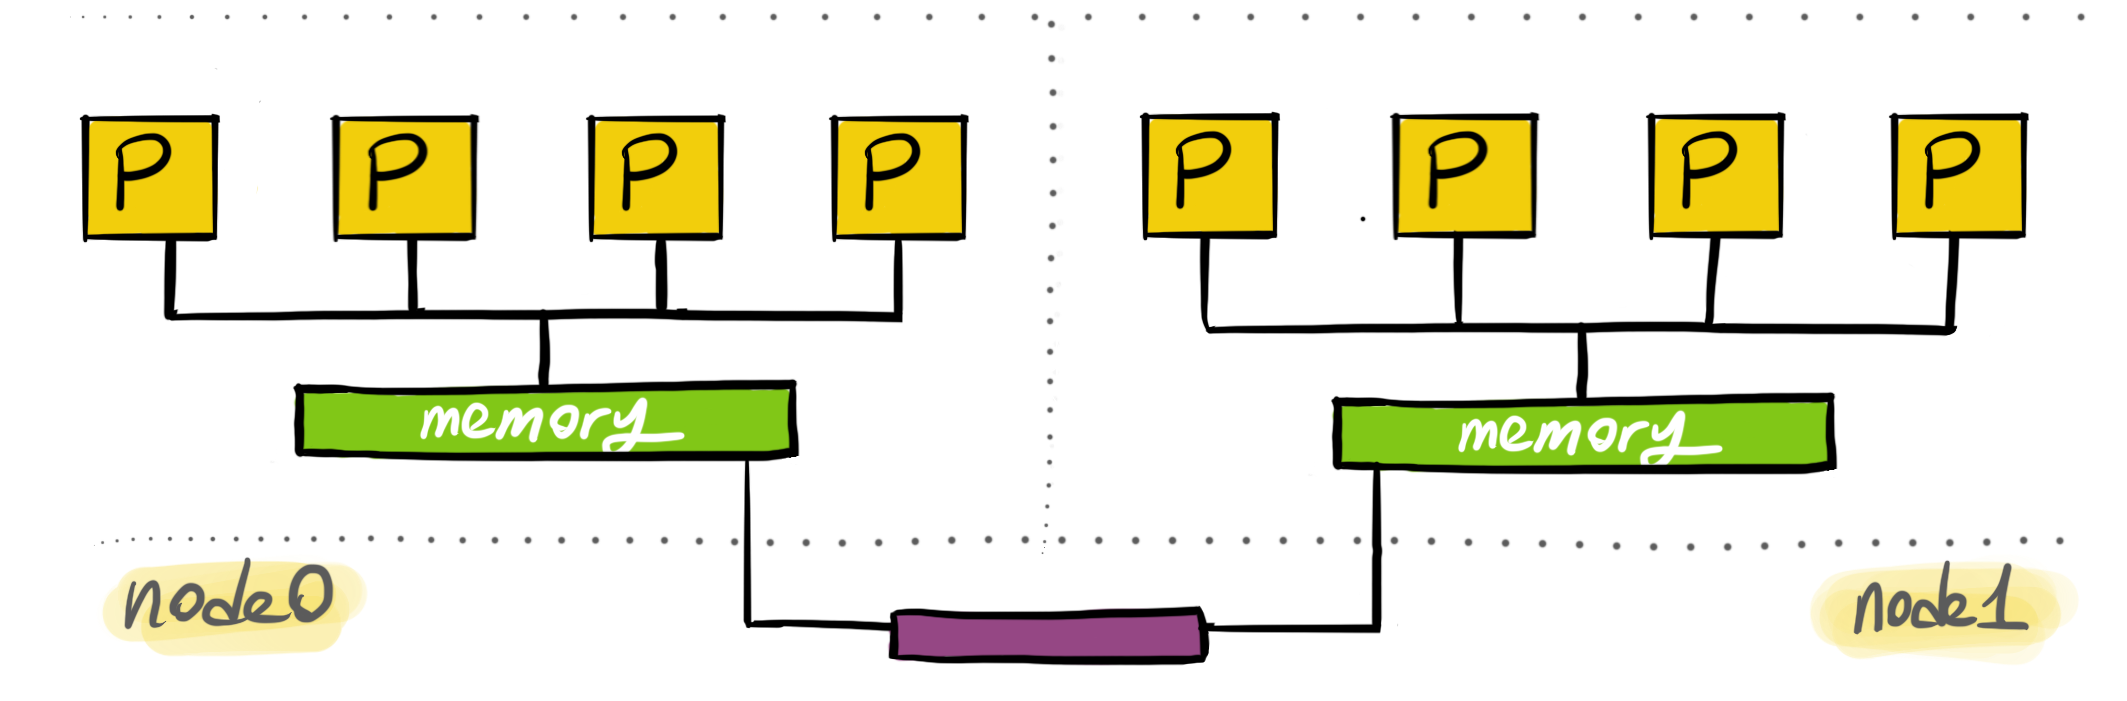 NUMA architecture with two nodes